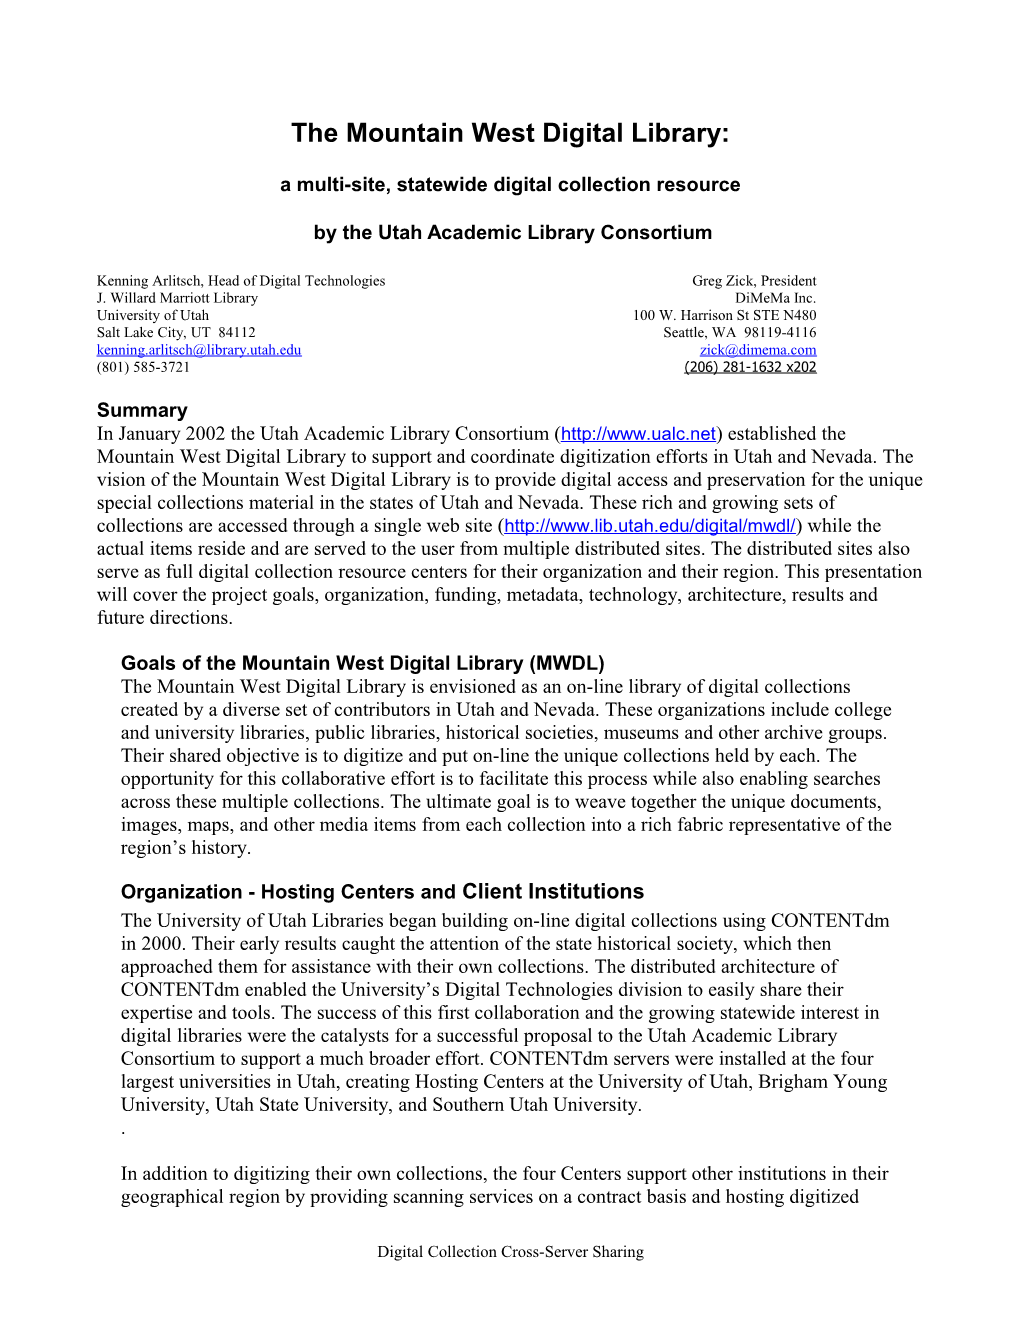 Digital Collection Cross-Server Sharing: Utah Academic Library Consortium